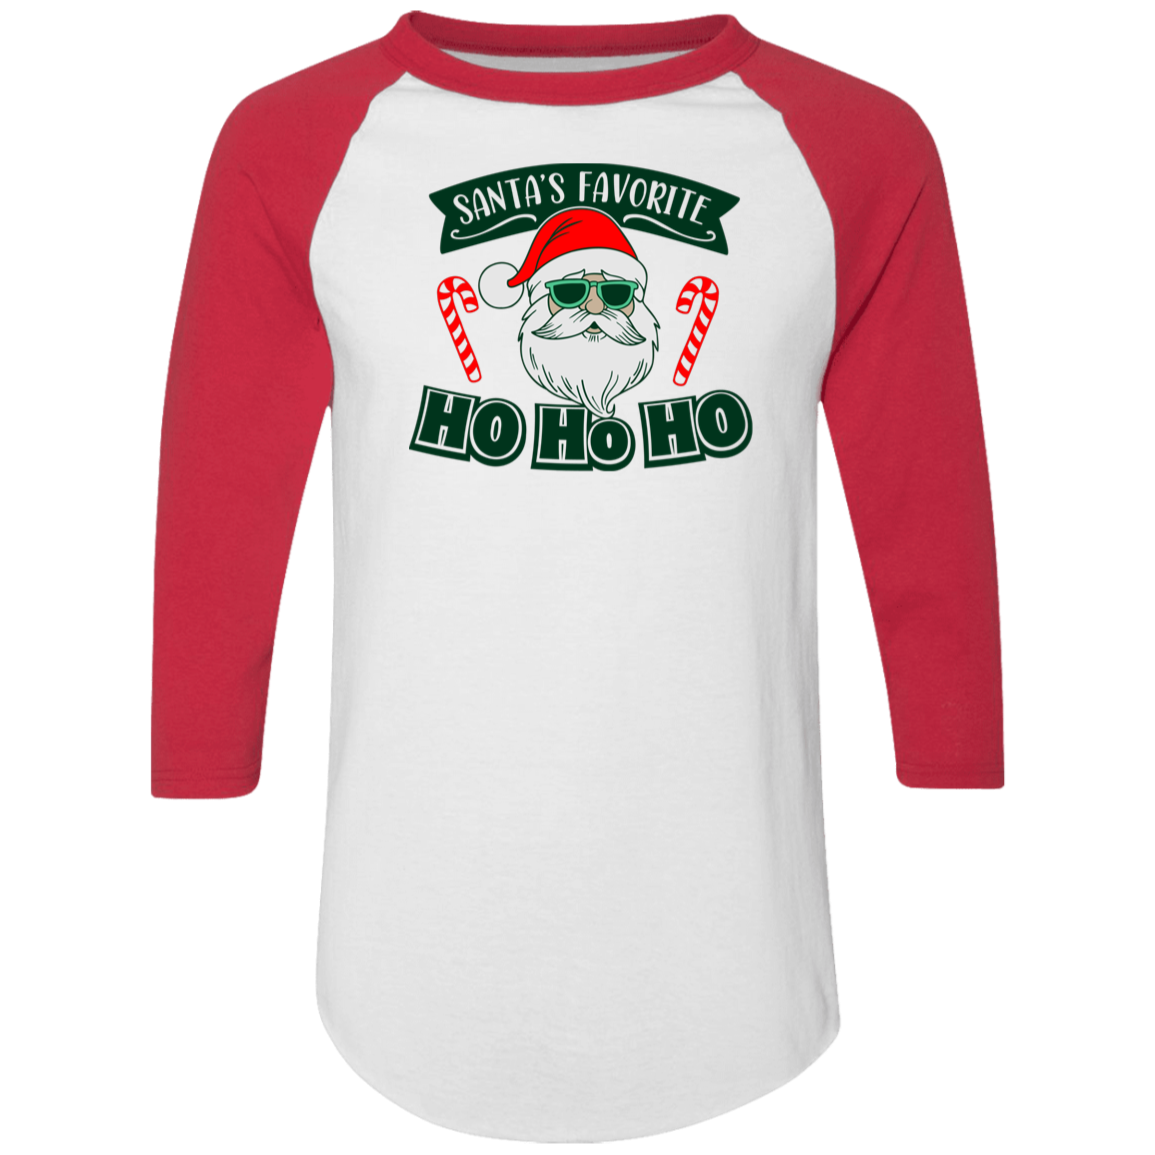 Santas Favorite Ho Ho Ho 4420 Colorblock Raglan Jersey